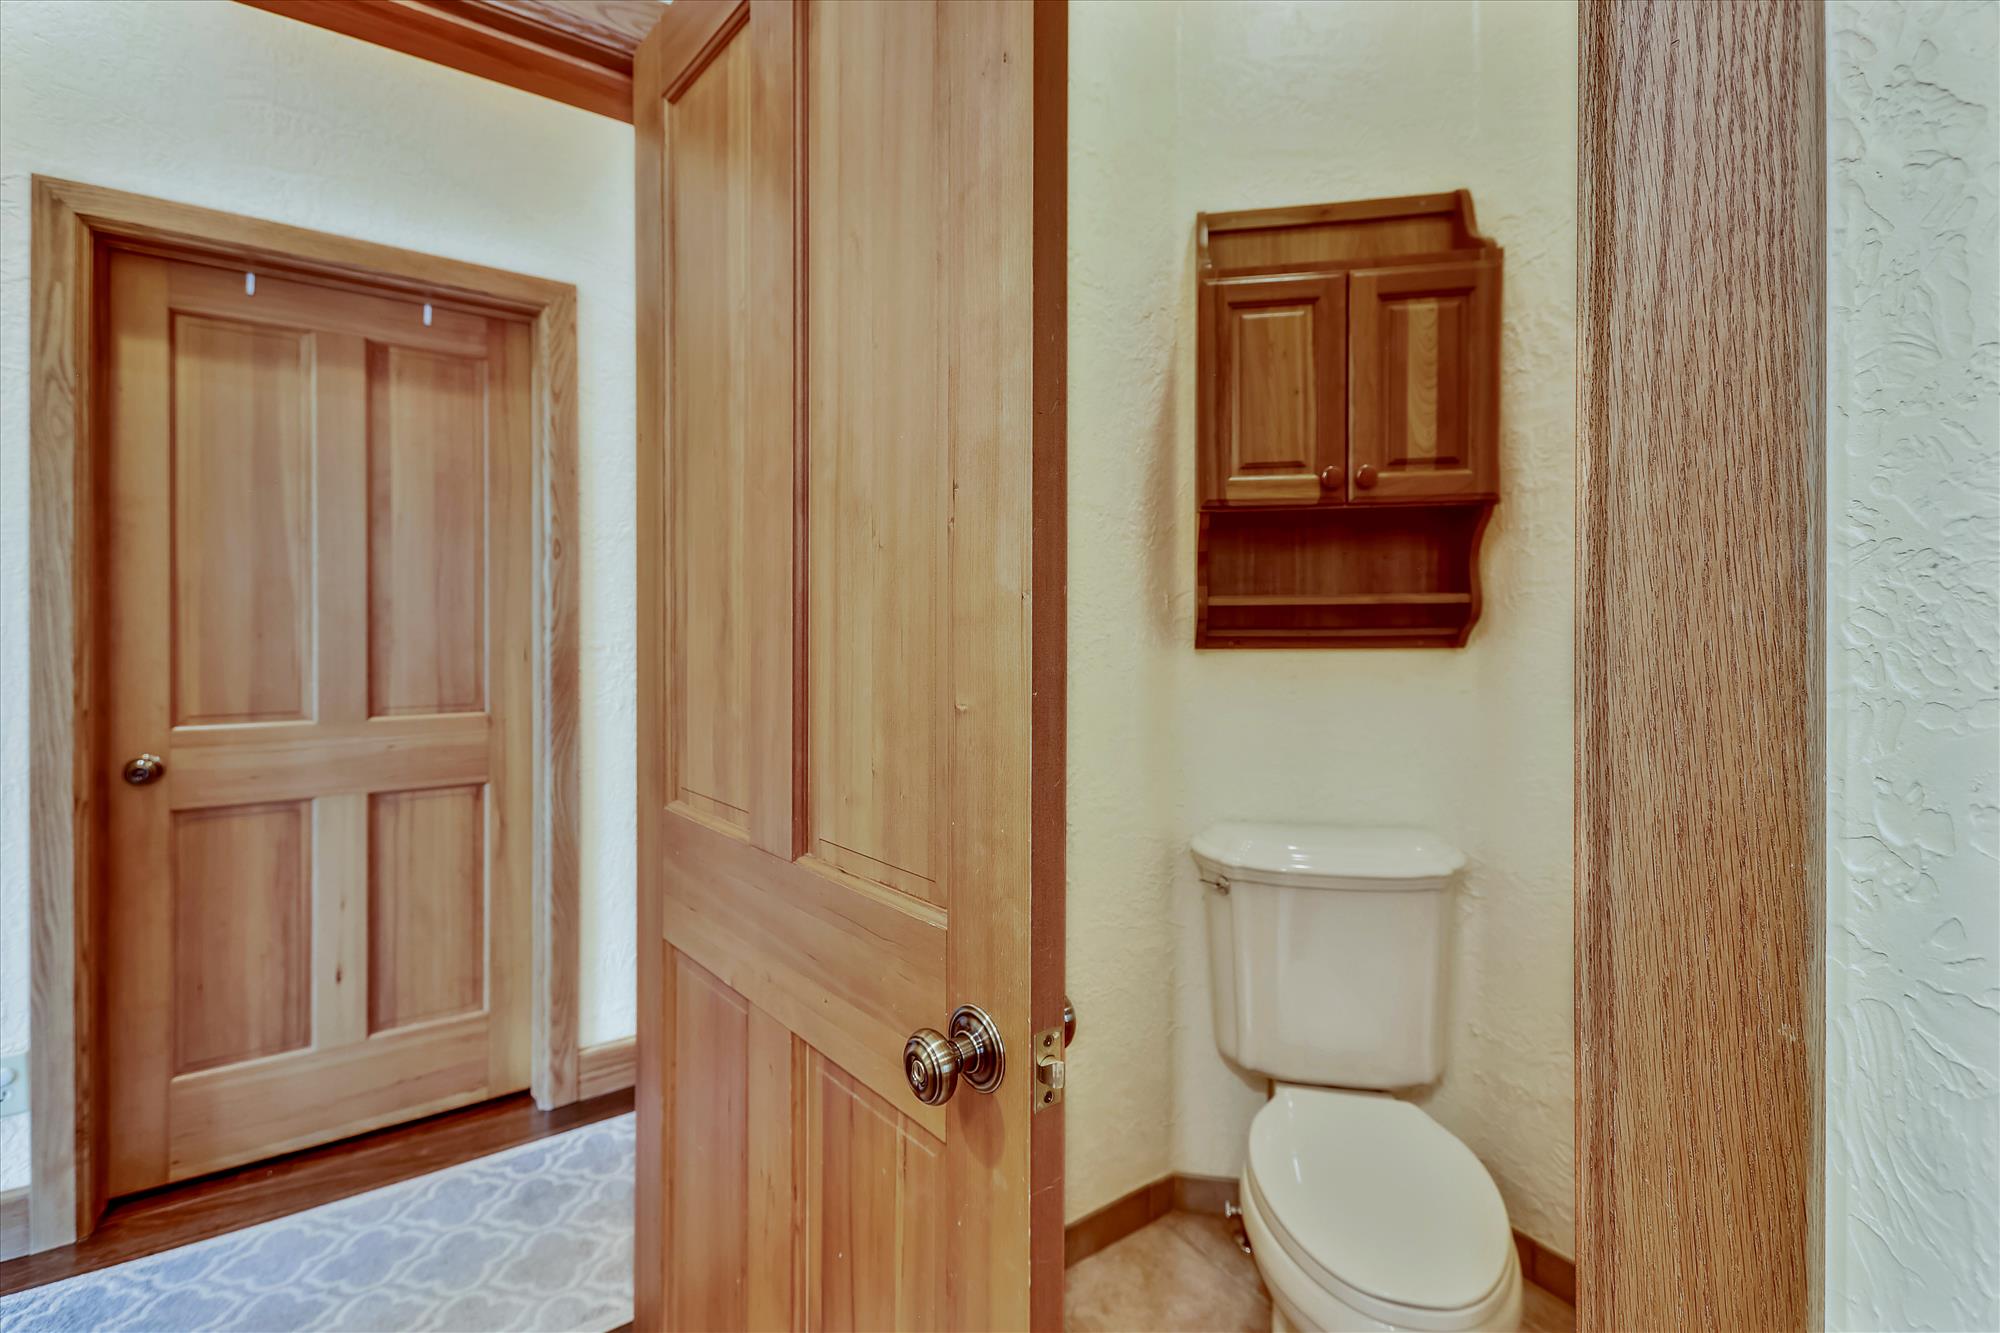 Additional master bathroom view - Evergreen Lodge Breckenridge Vacation Rental